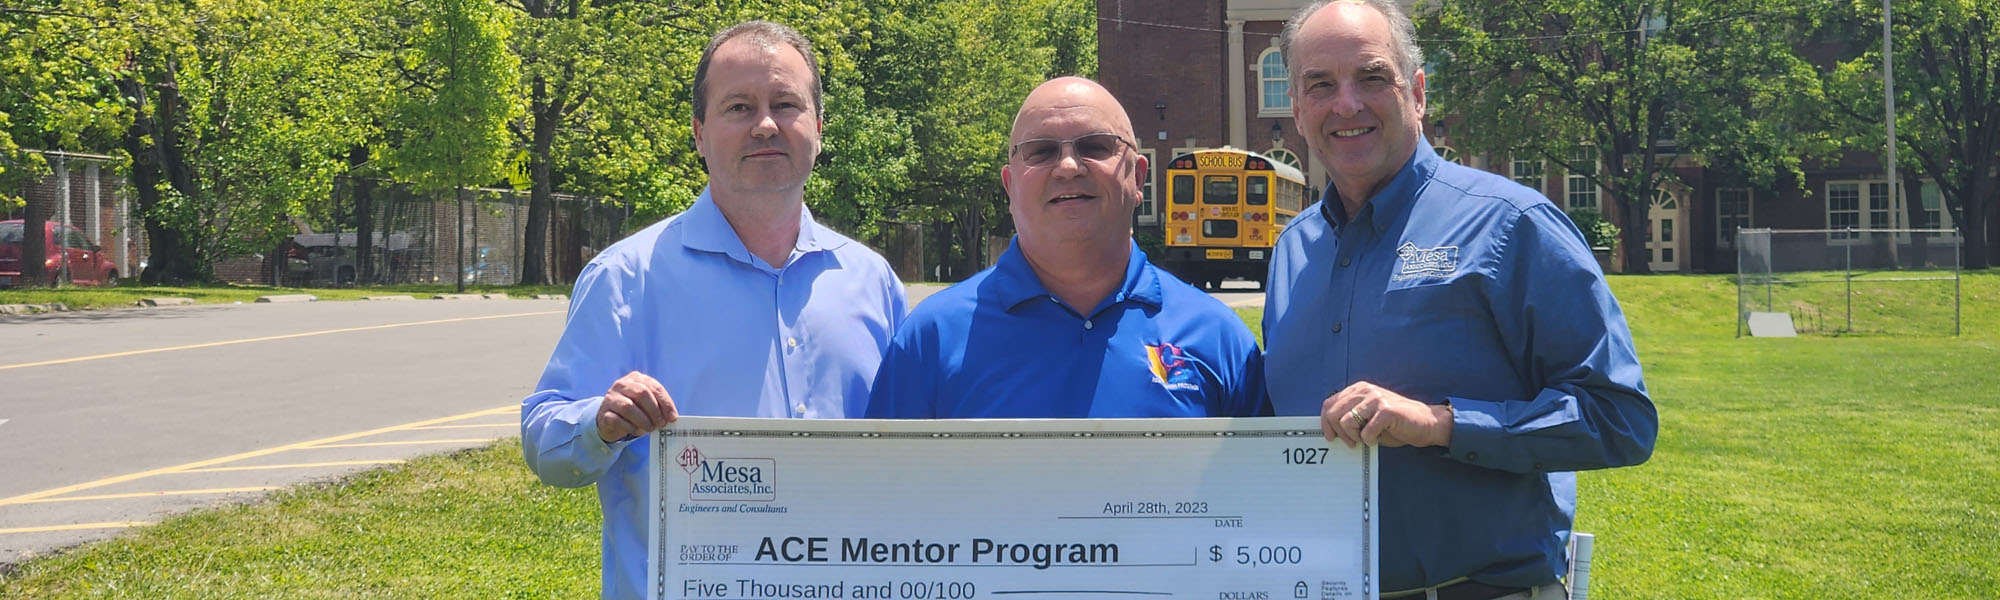 ACE Mentor Program receive check